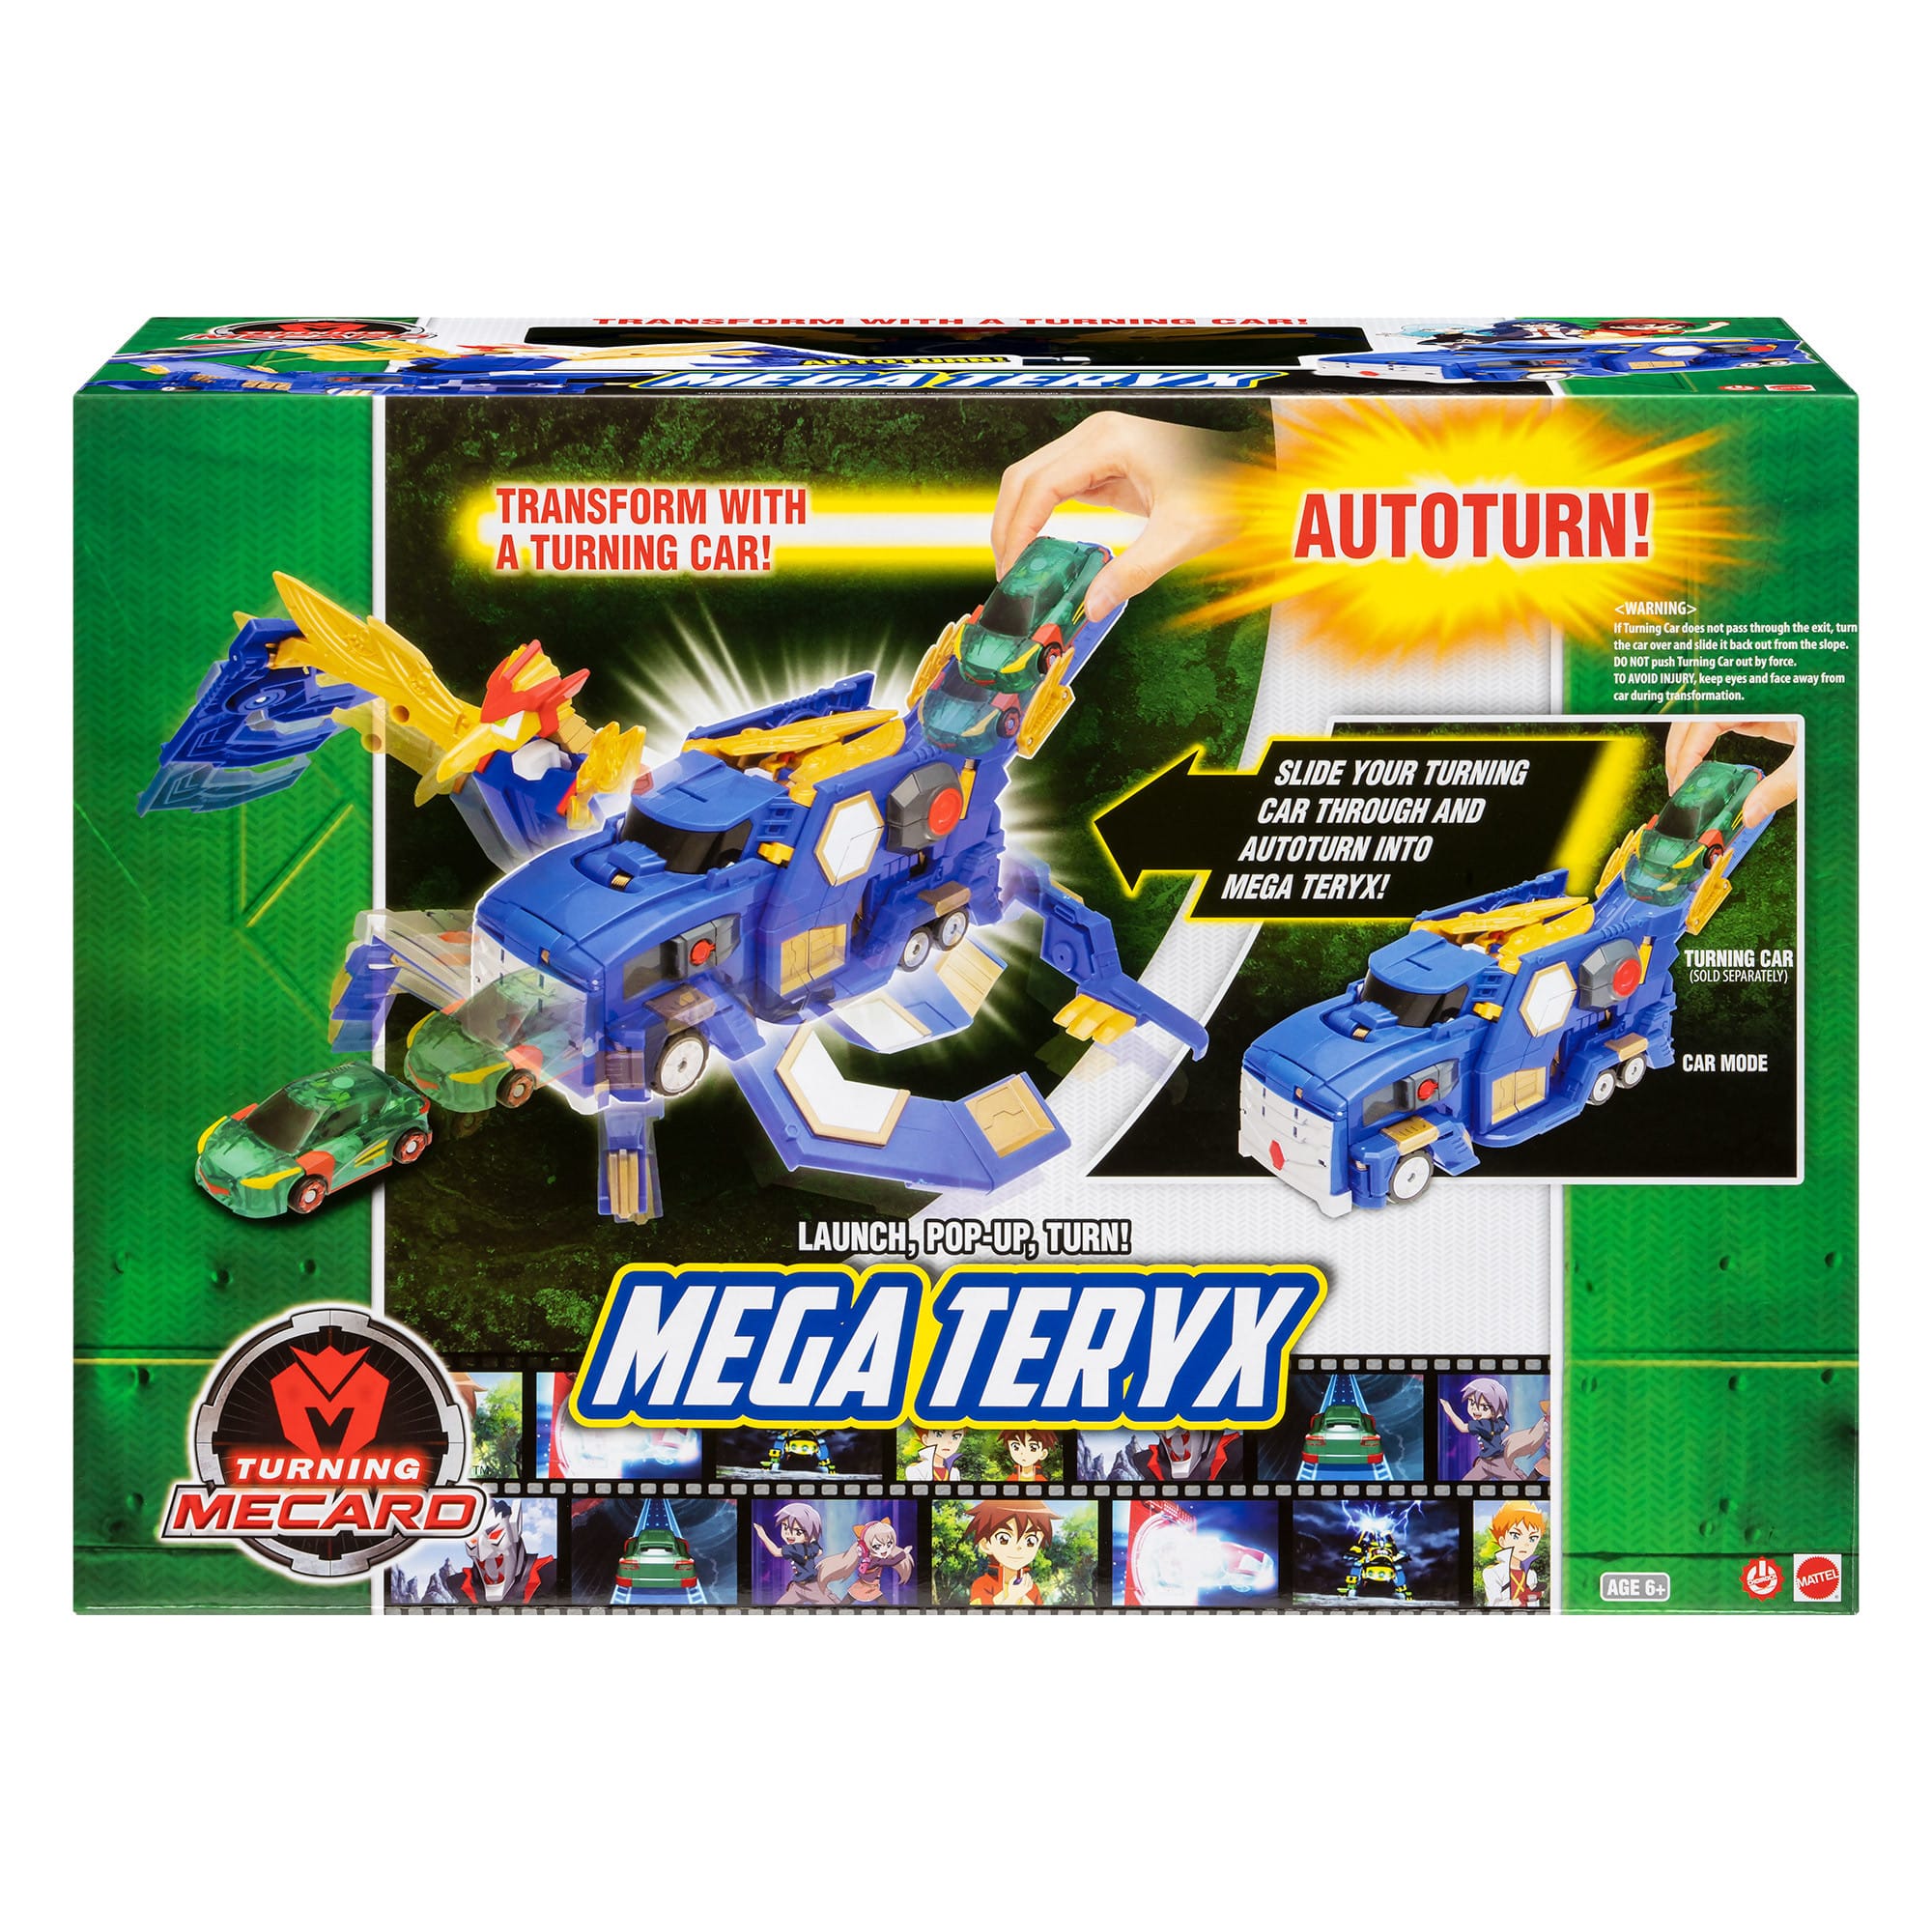 Turning Mecard - Mega Teryx